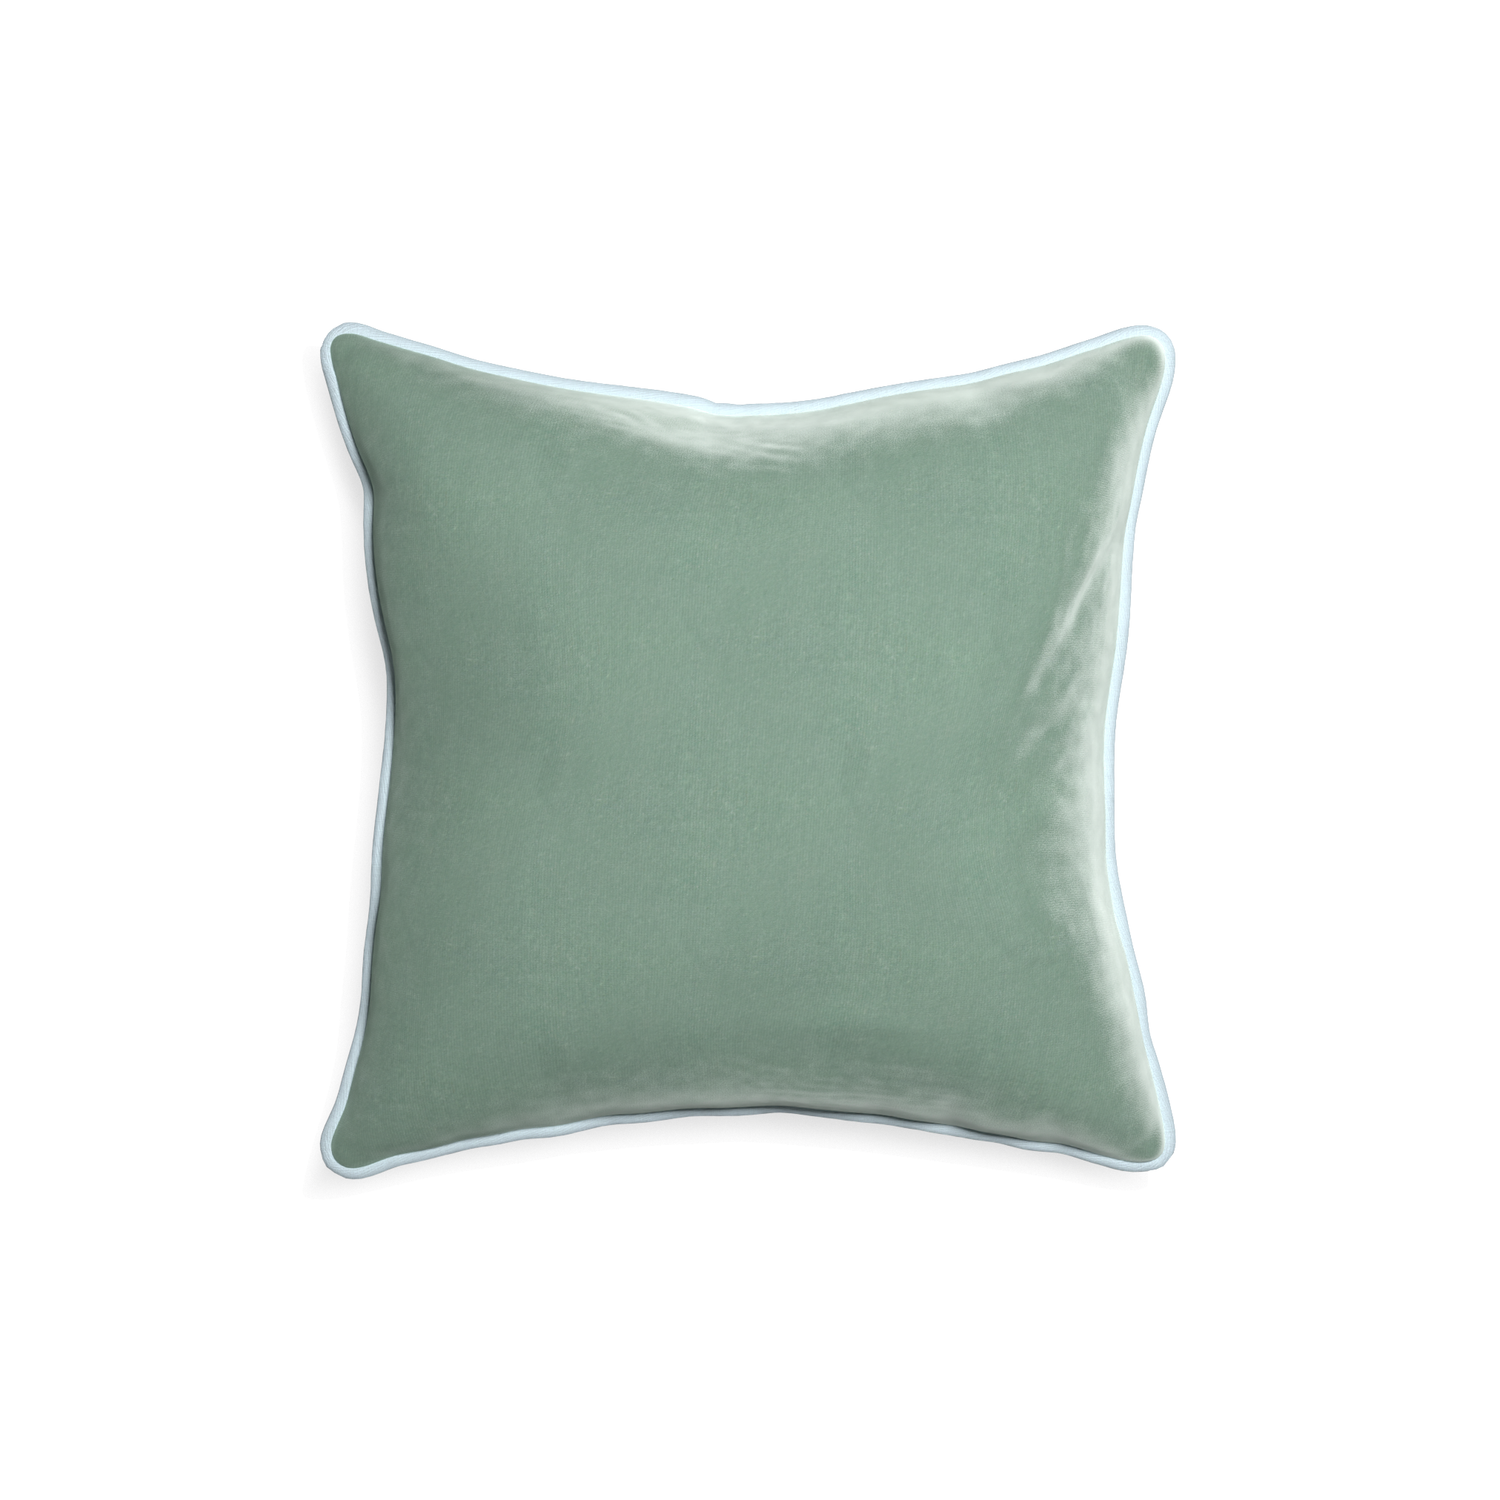 square blue green velvet pillow with light blue piping